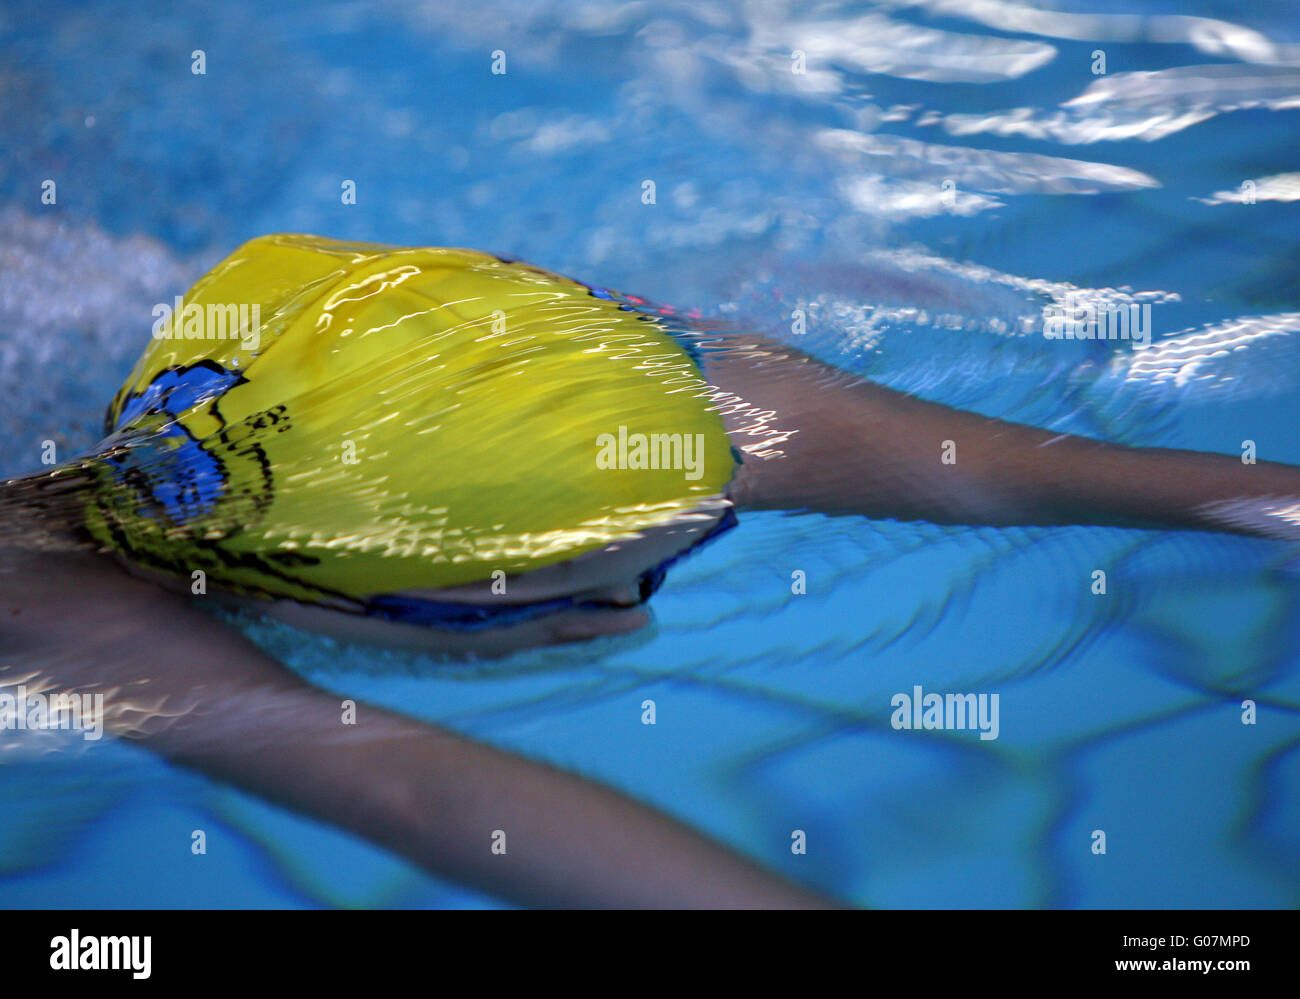 sliding under water Stock Photo